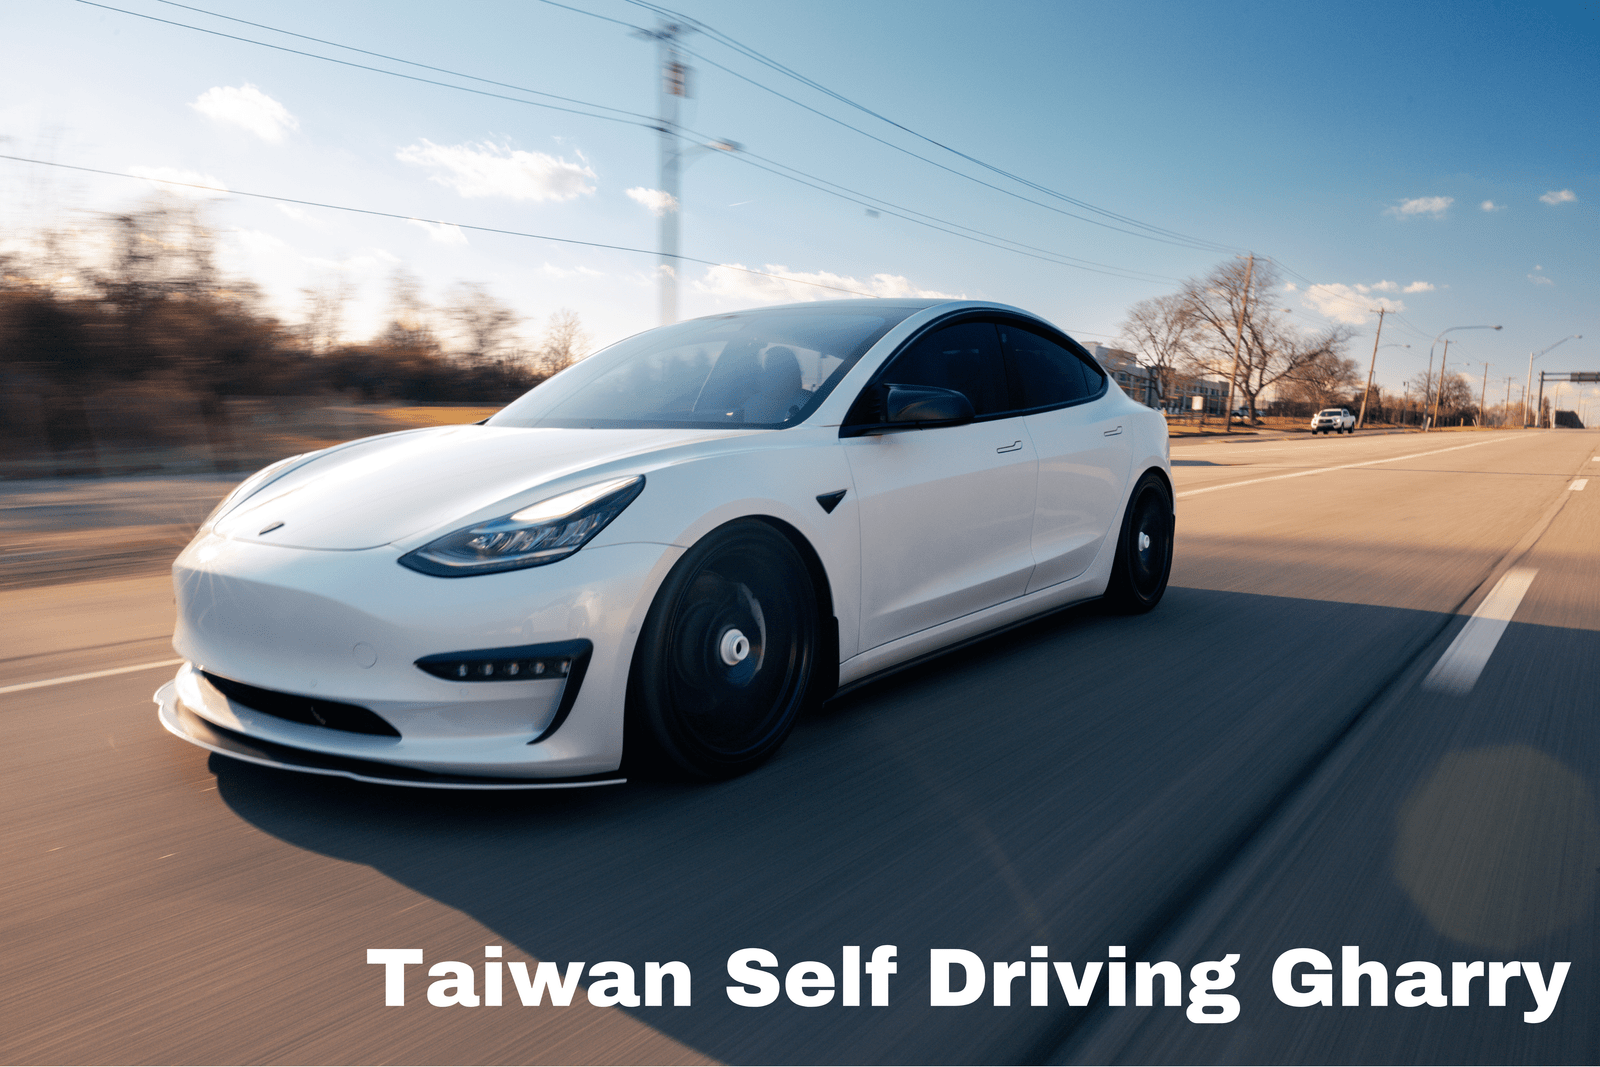 Taiwan Self Driving Gharry